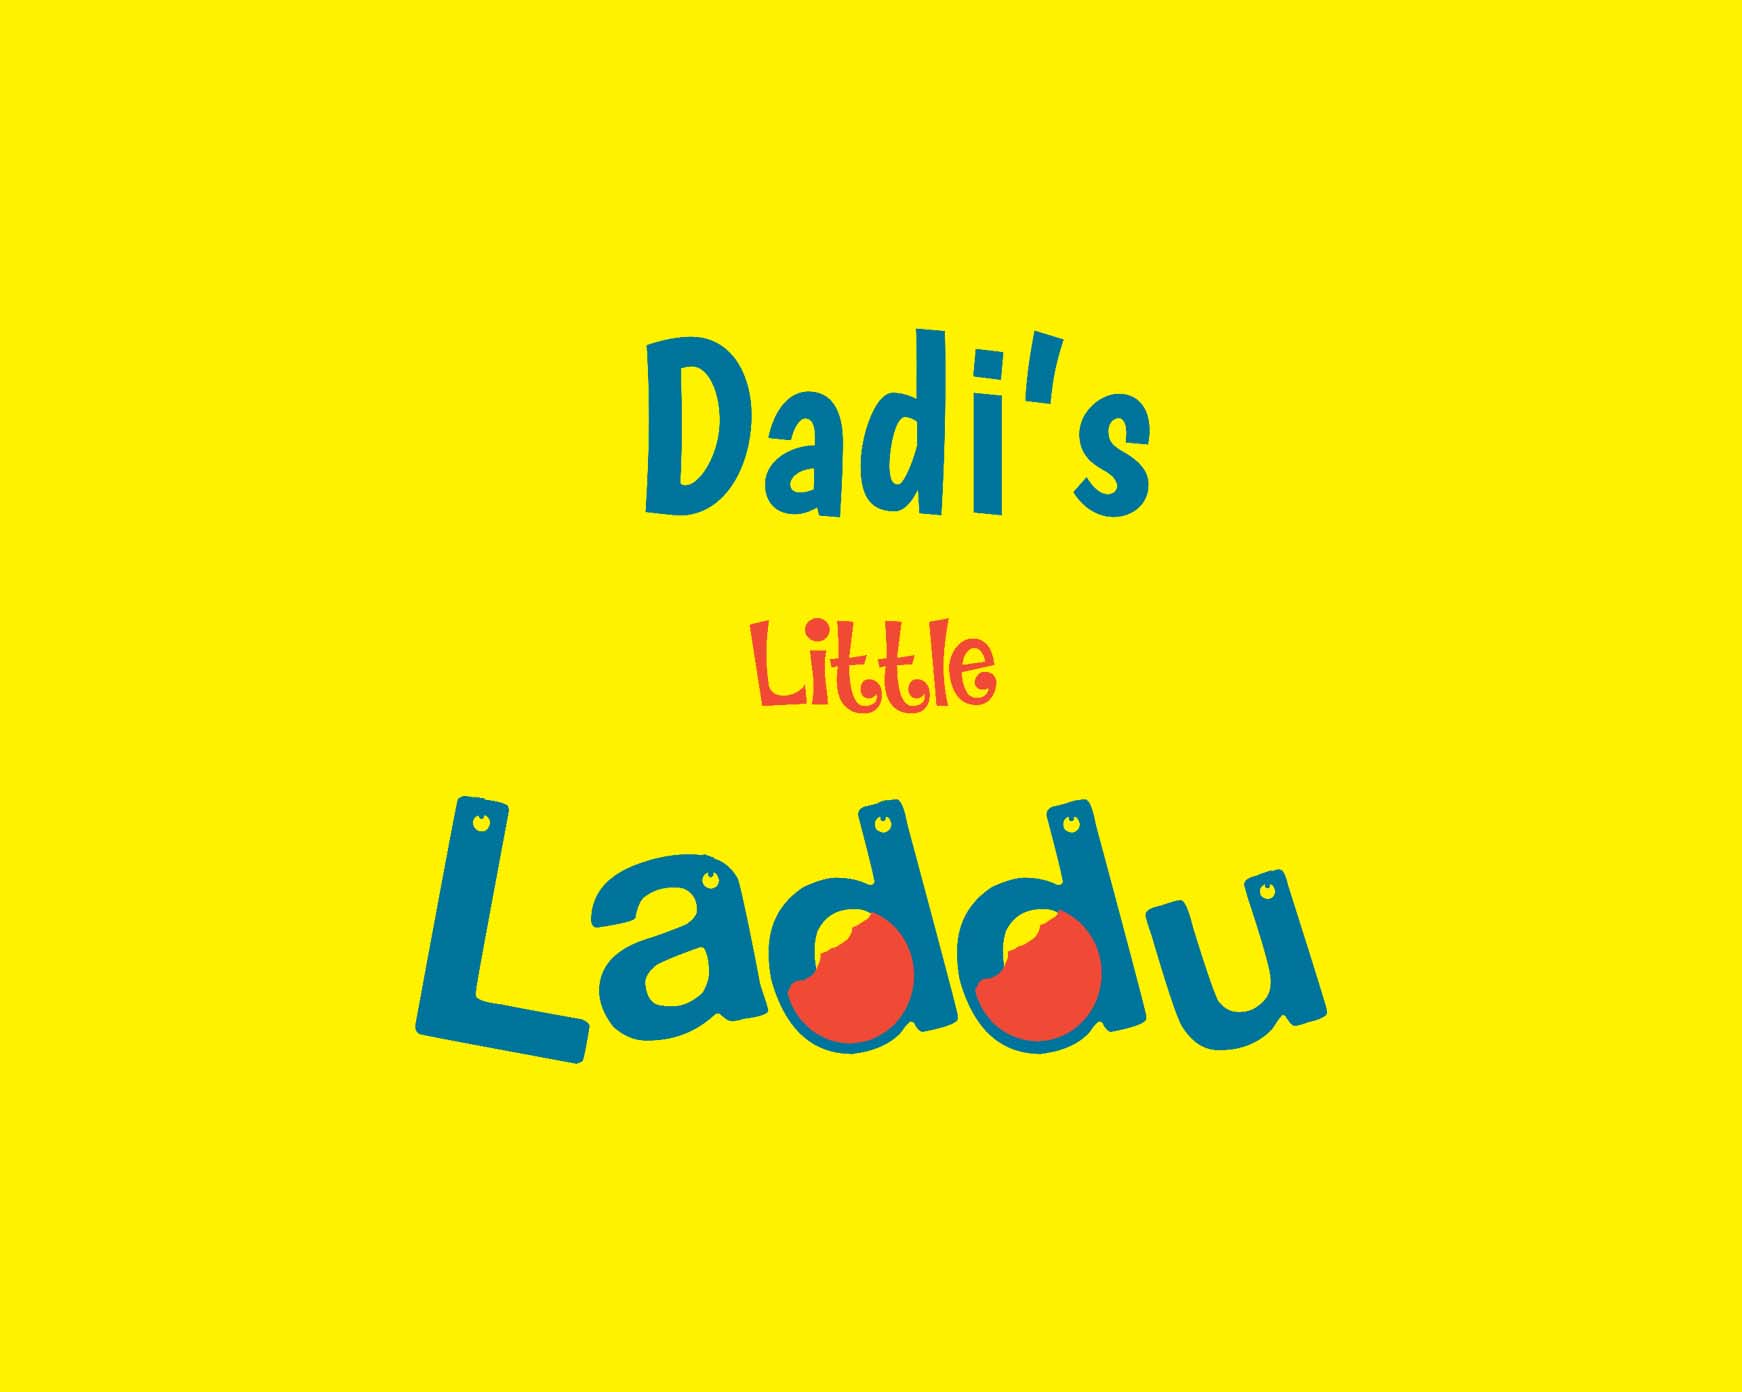 Dadis-lil-laddu-yellow-image.jpg